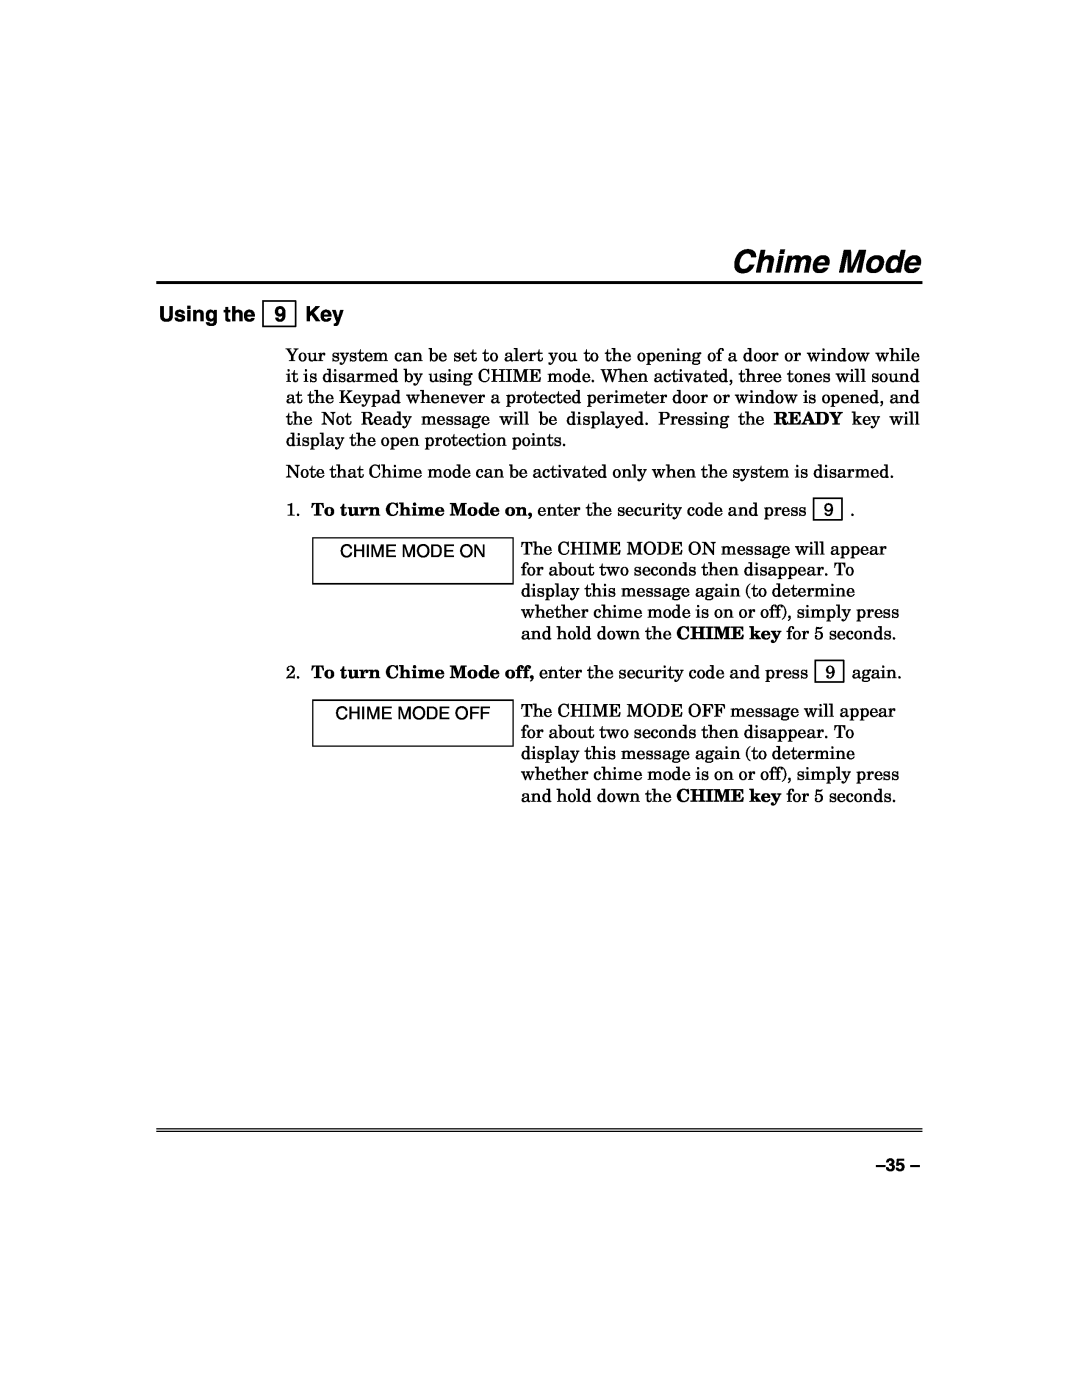 Honeywell VISTA-50PUL manual Chime Mode, 9 Key, Using the 